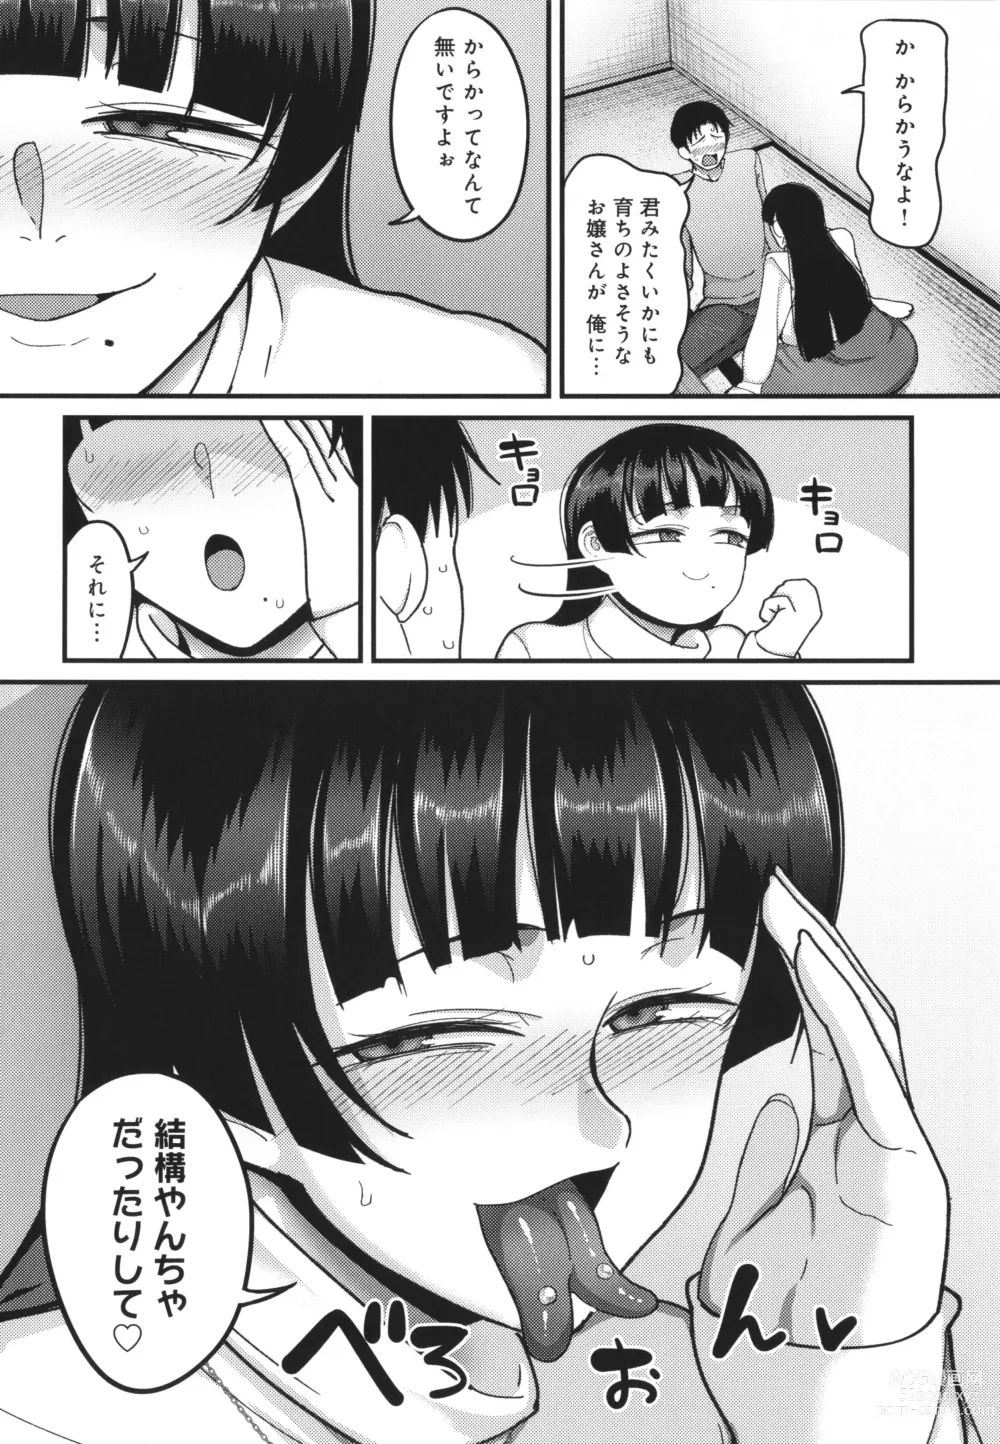 Page 183 of manga Nani Miten da yo! - What are you looking at?